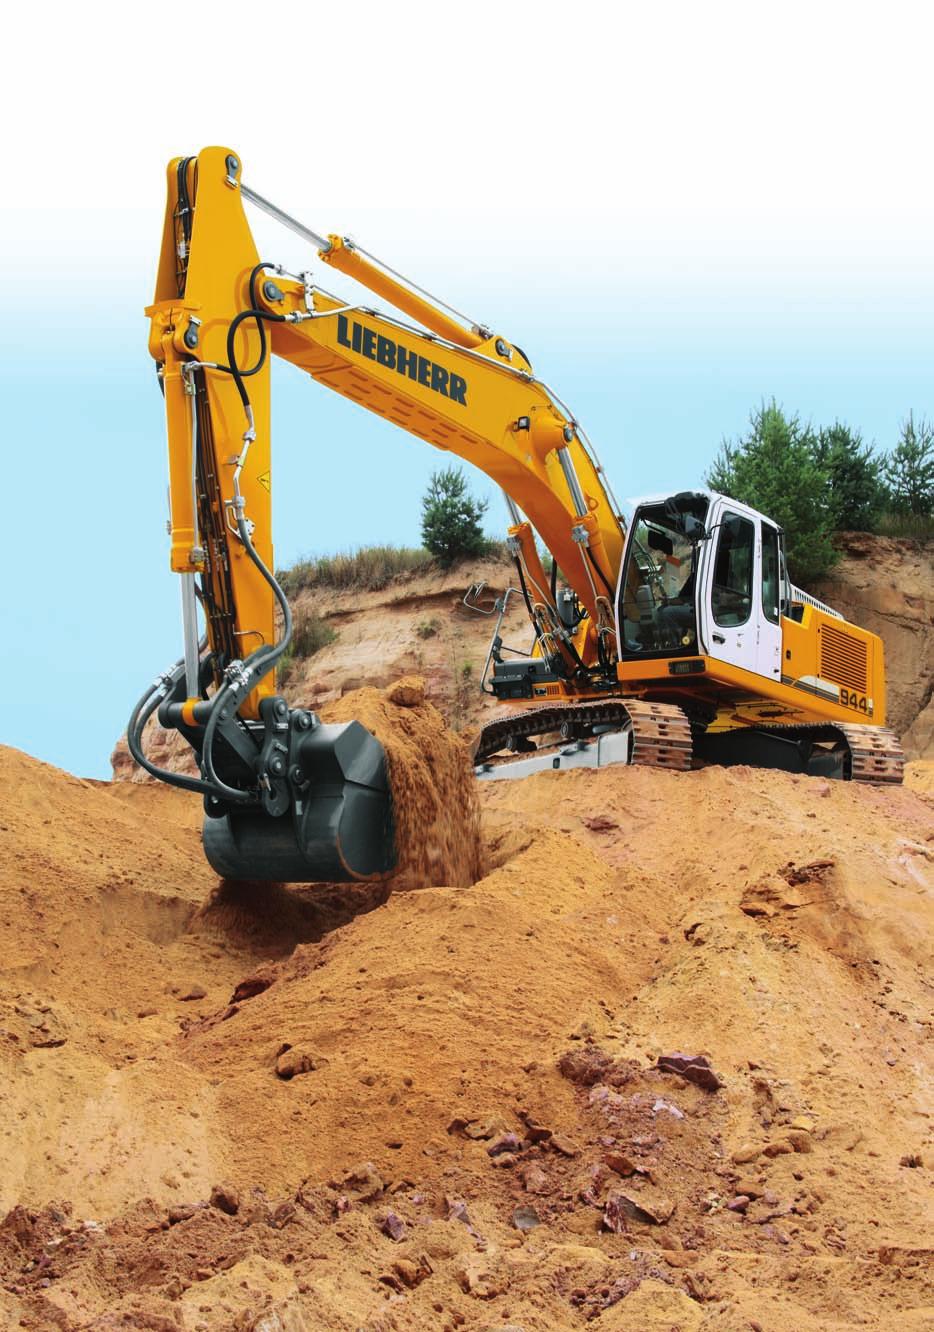 Crawler Excavator R 944 C Operating Weight: 38,500-46,300 kg